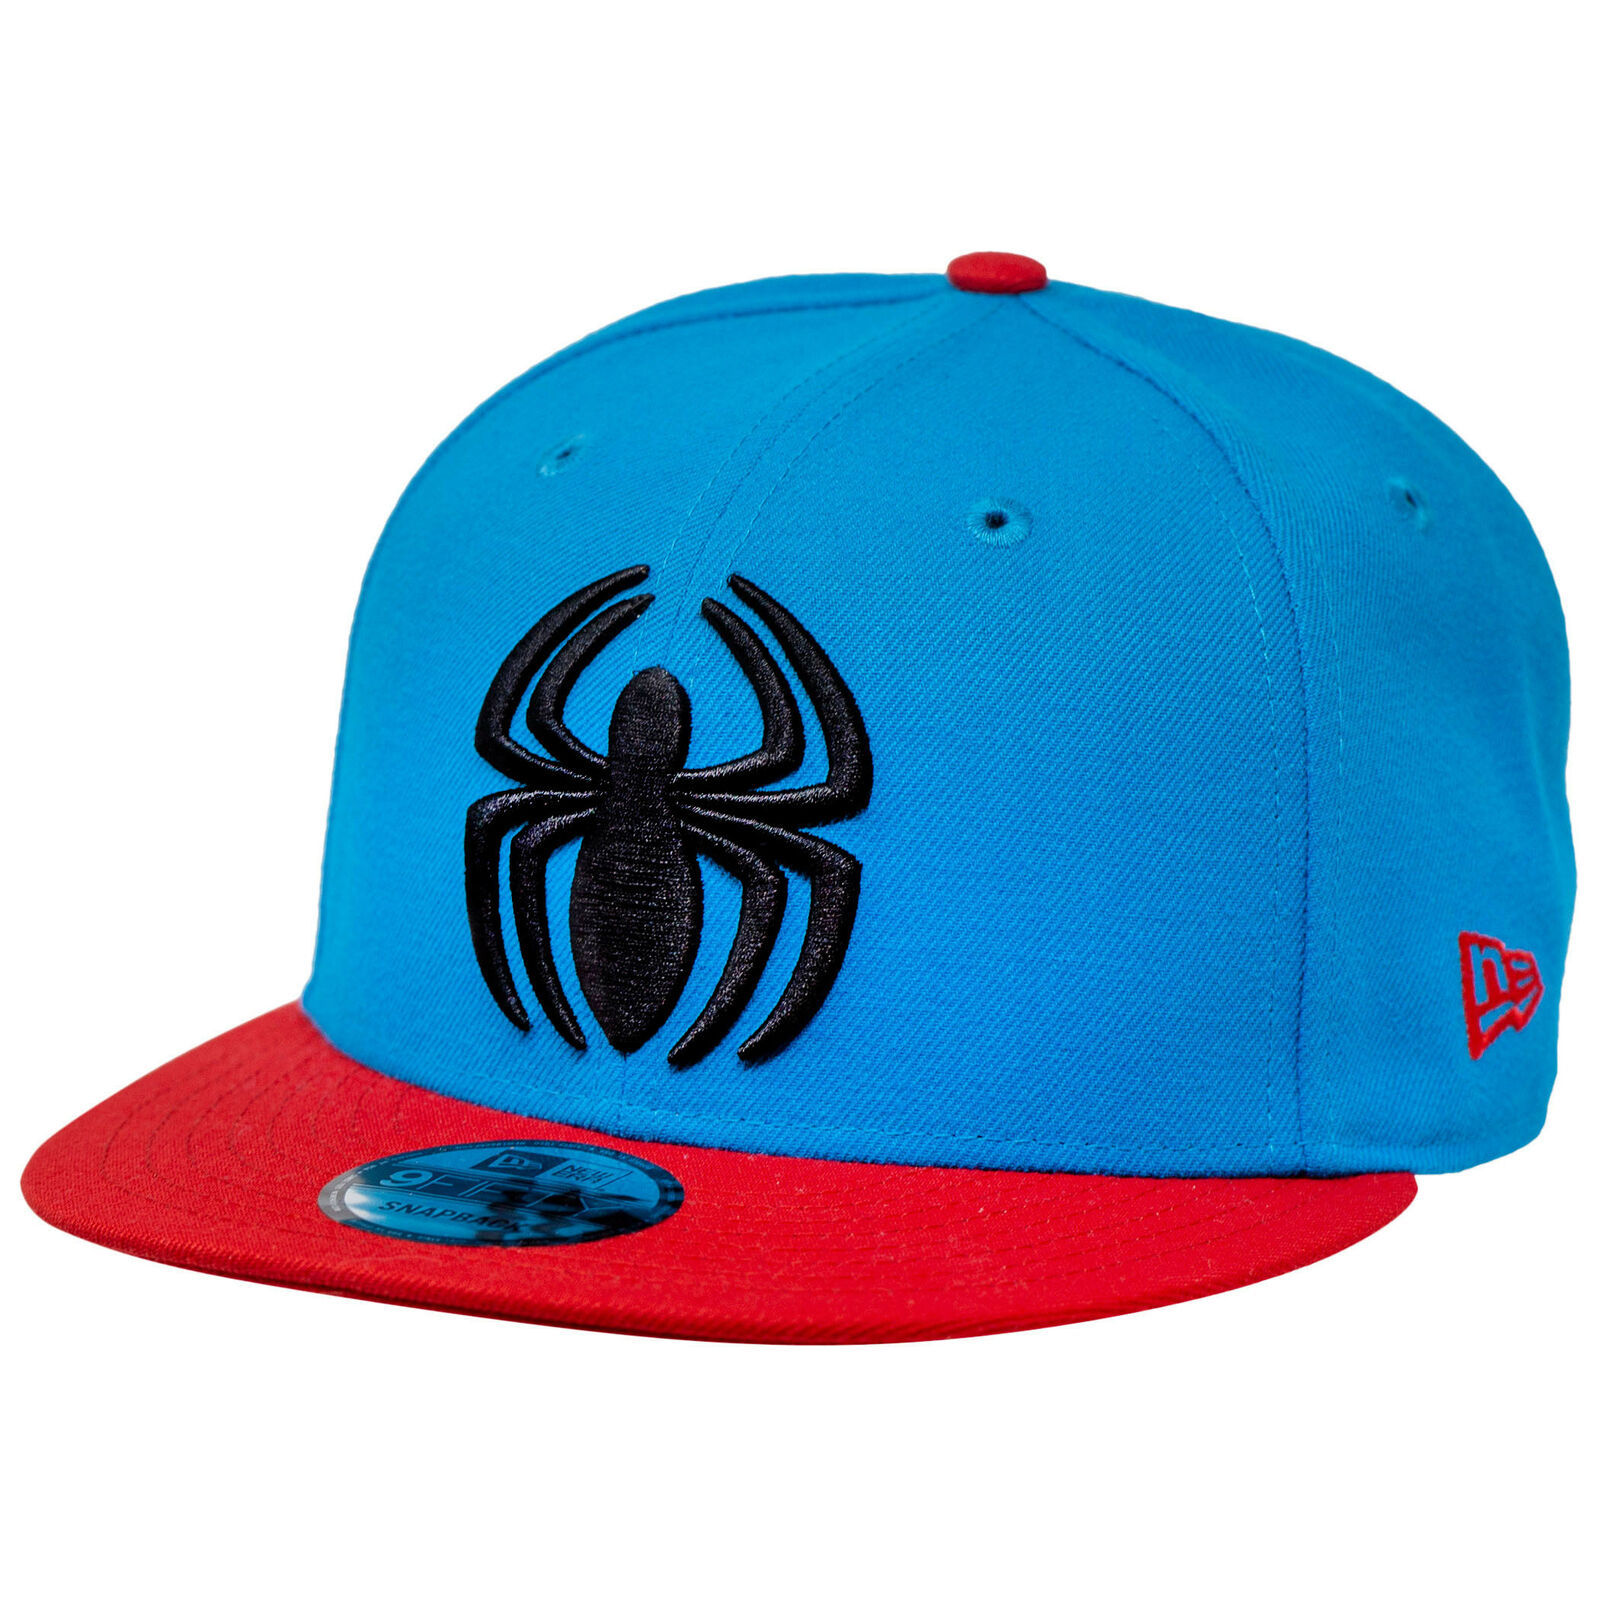 Spider-Man Scarlet Spider New Era 9Fifty Adjustable Hat Red - Hats